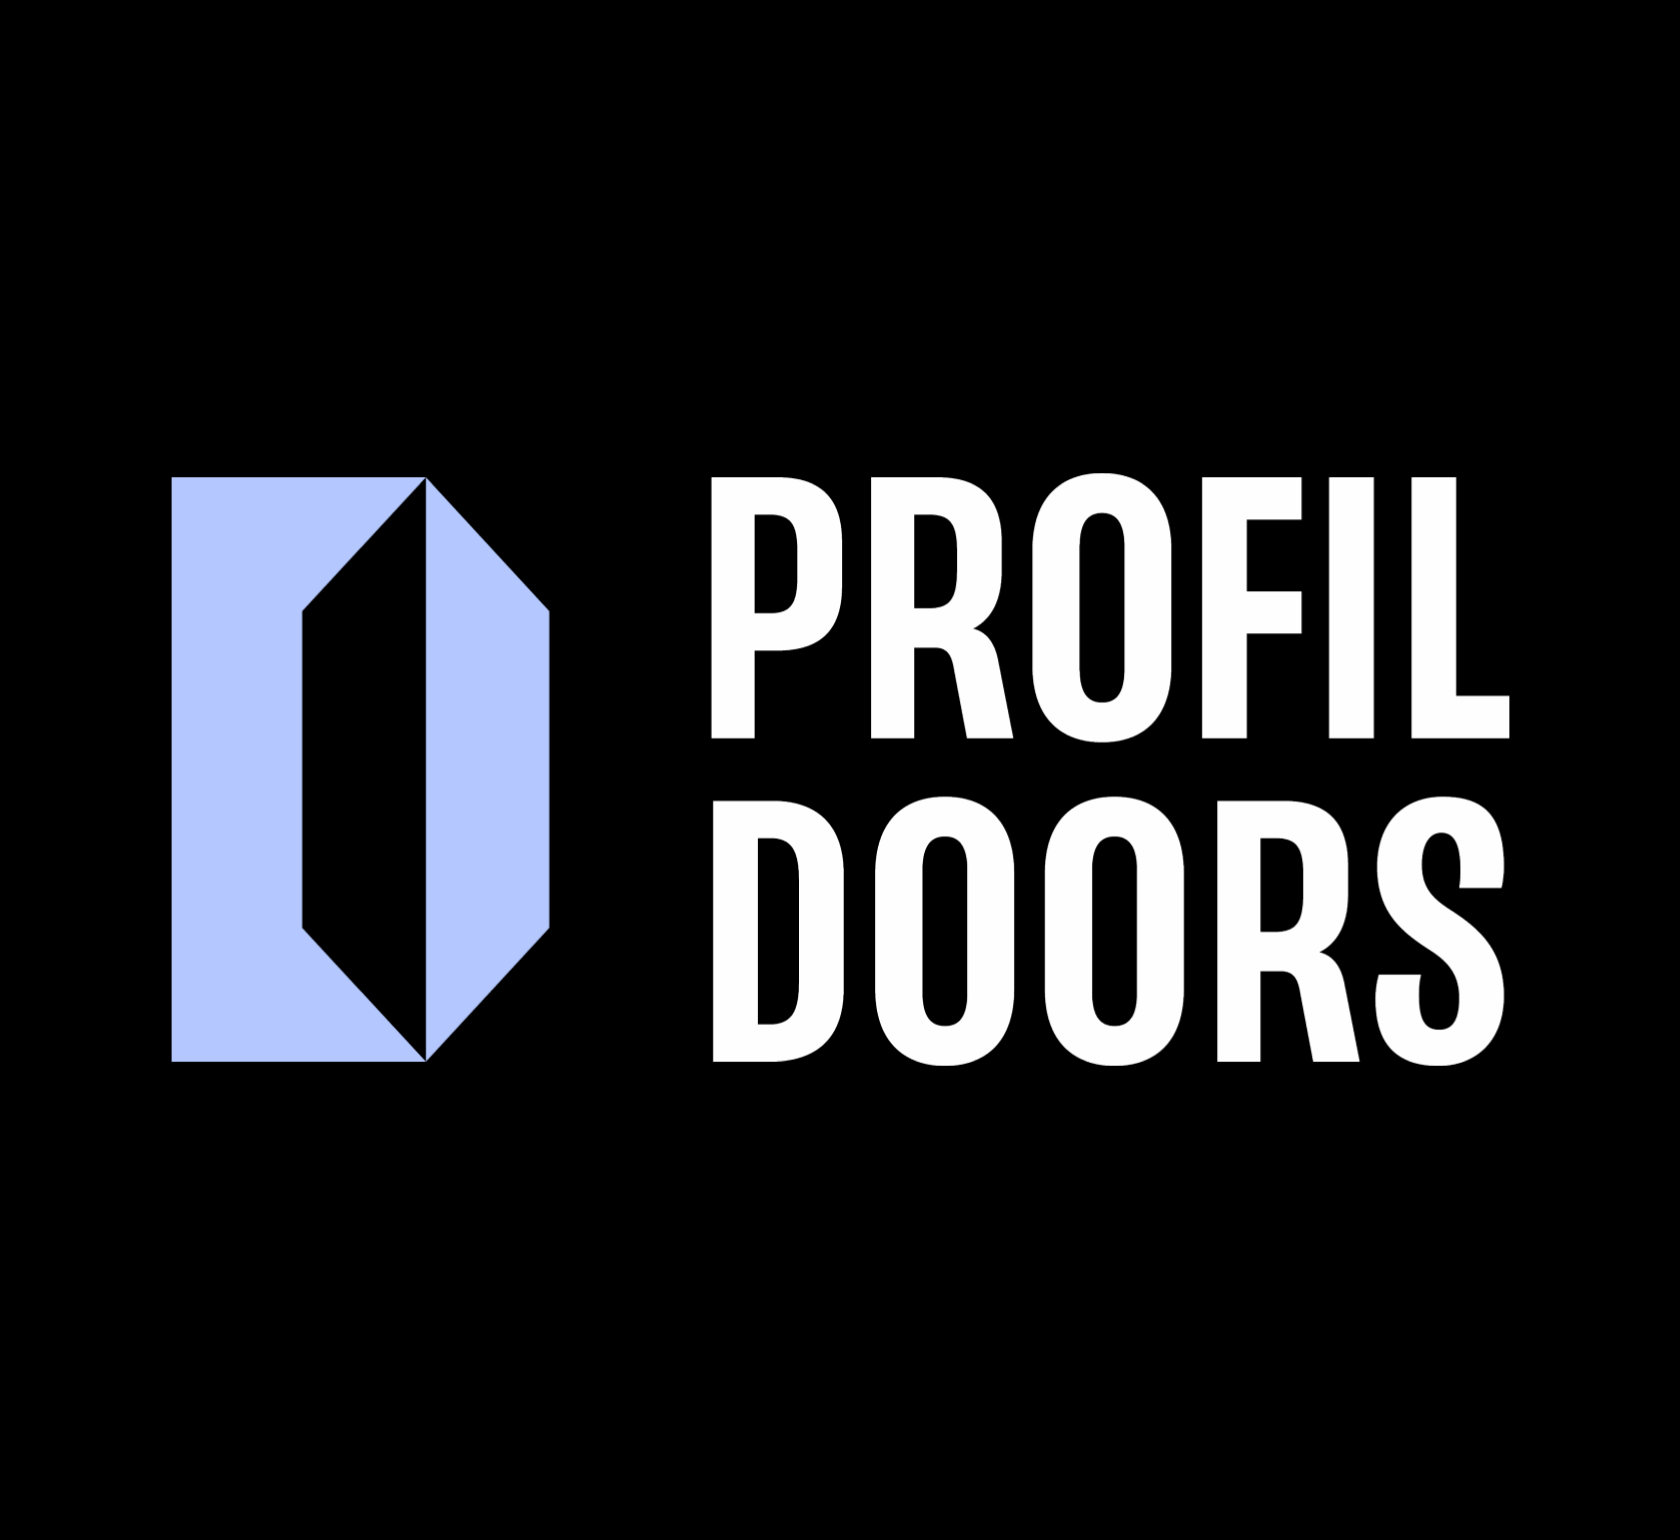 Каталог Дверей Profile Doors